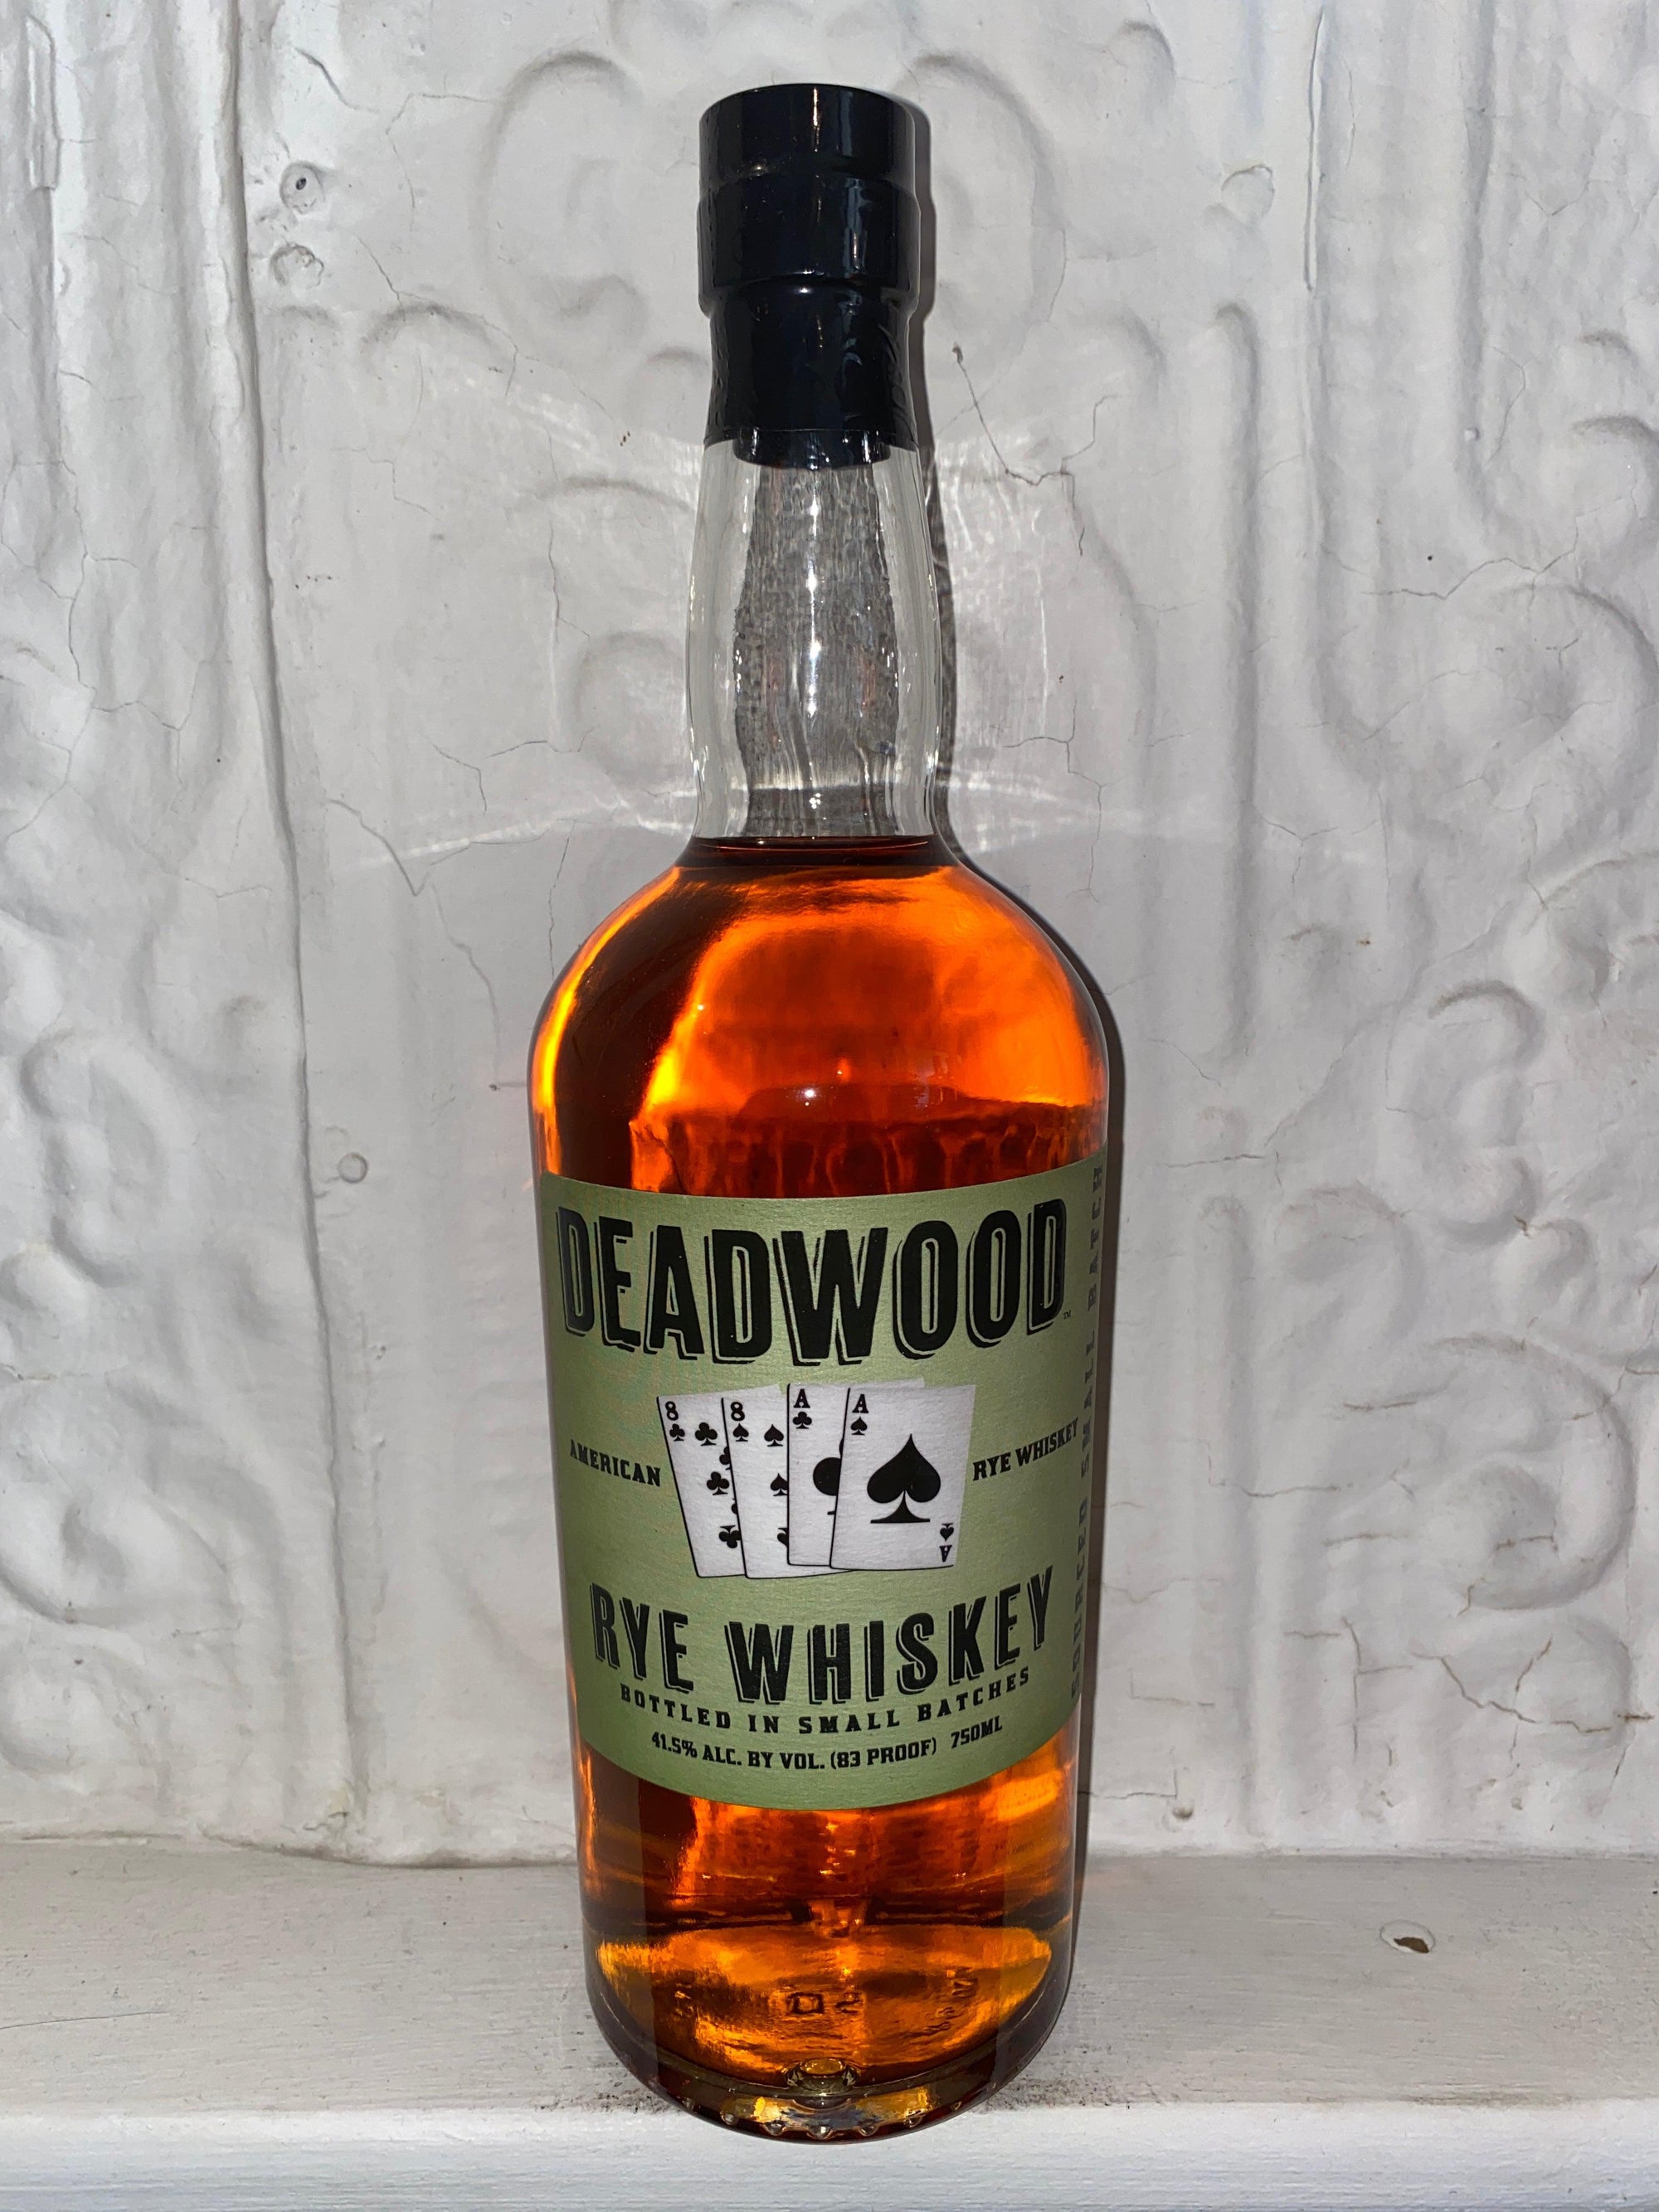 Deadwood Rye Whiskey (Kentucky, USA)-Spirits-Bibber & Bell